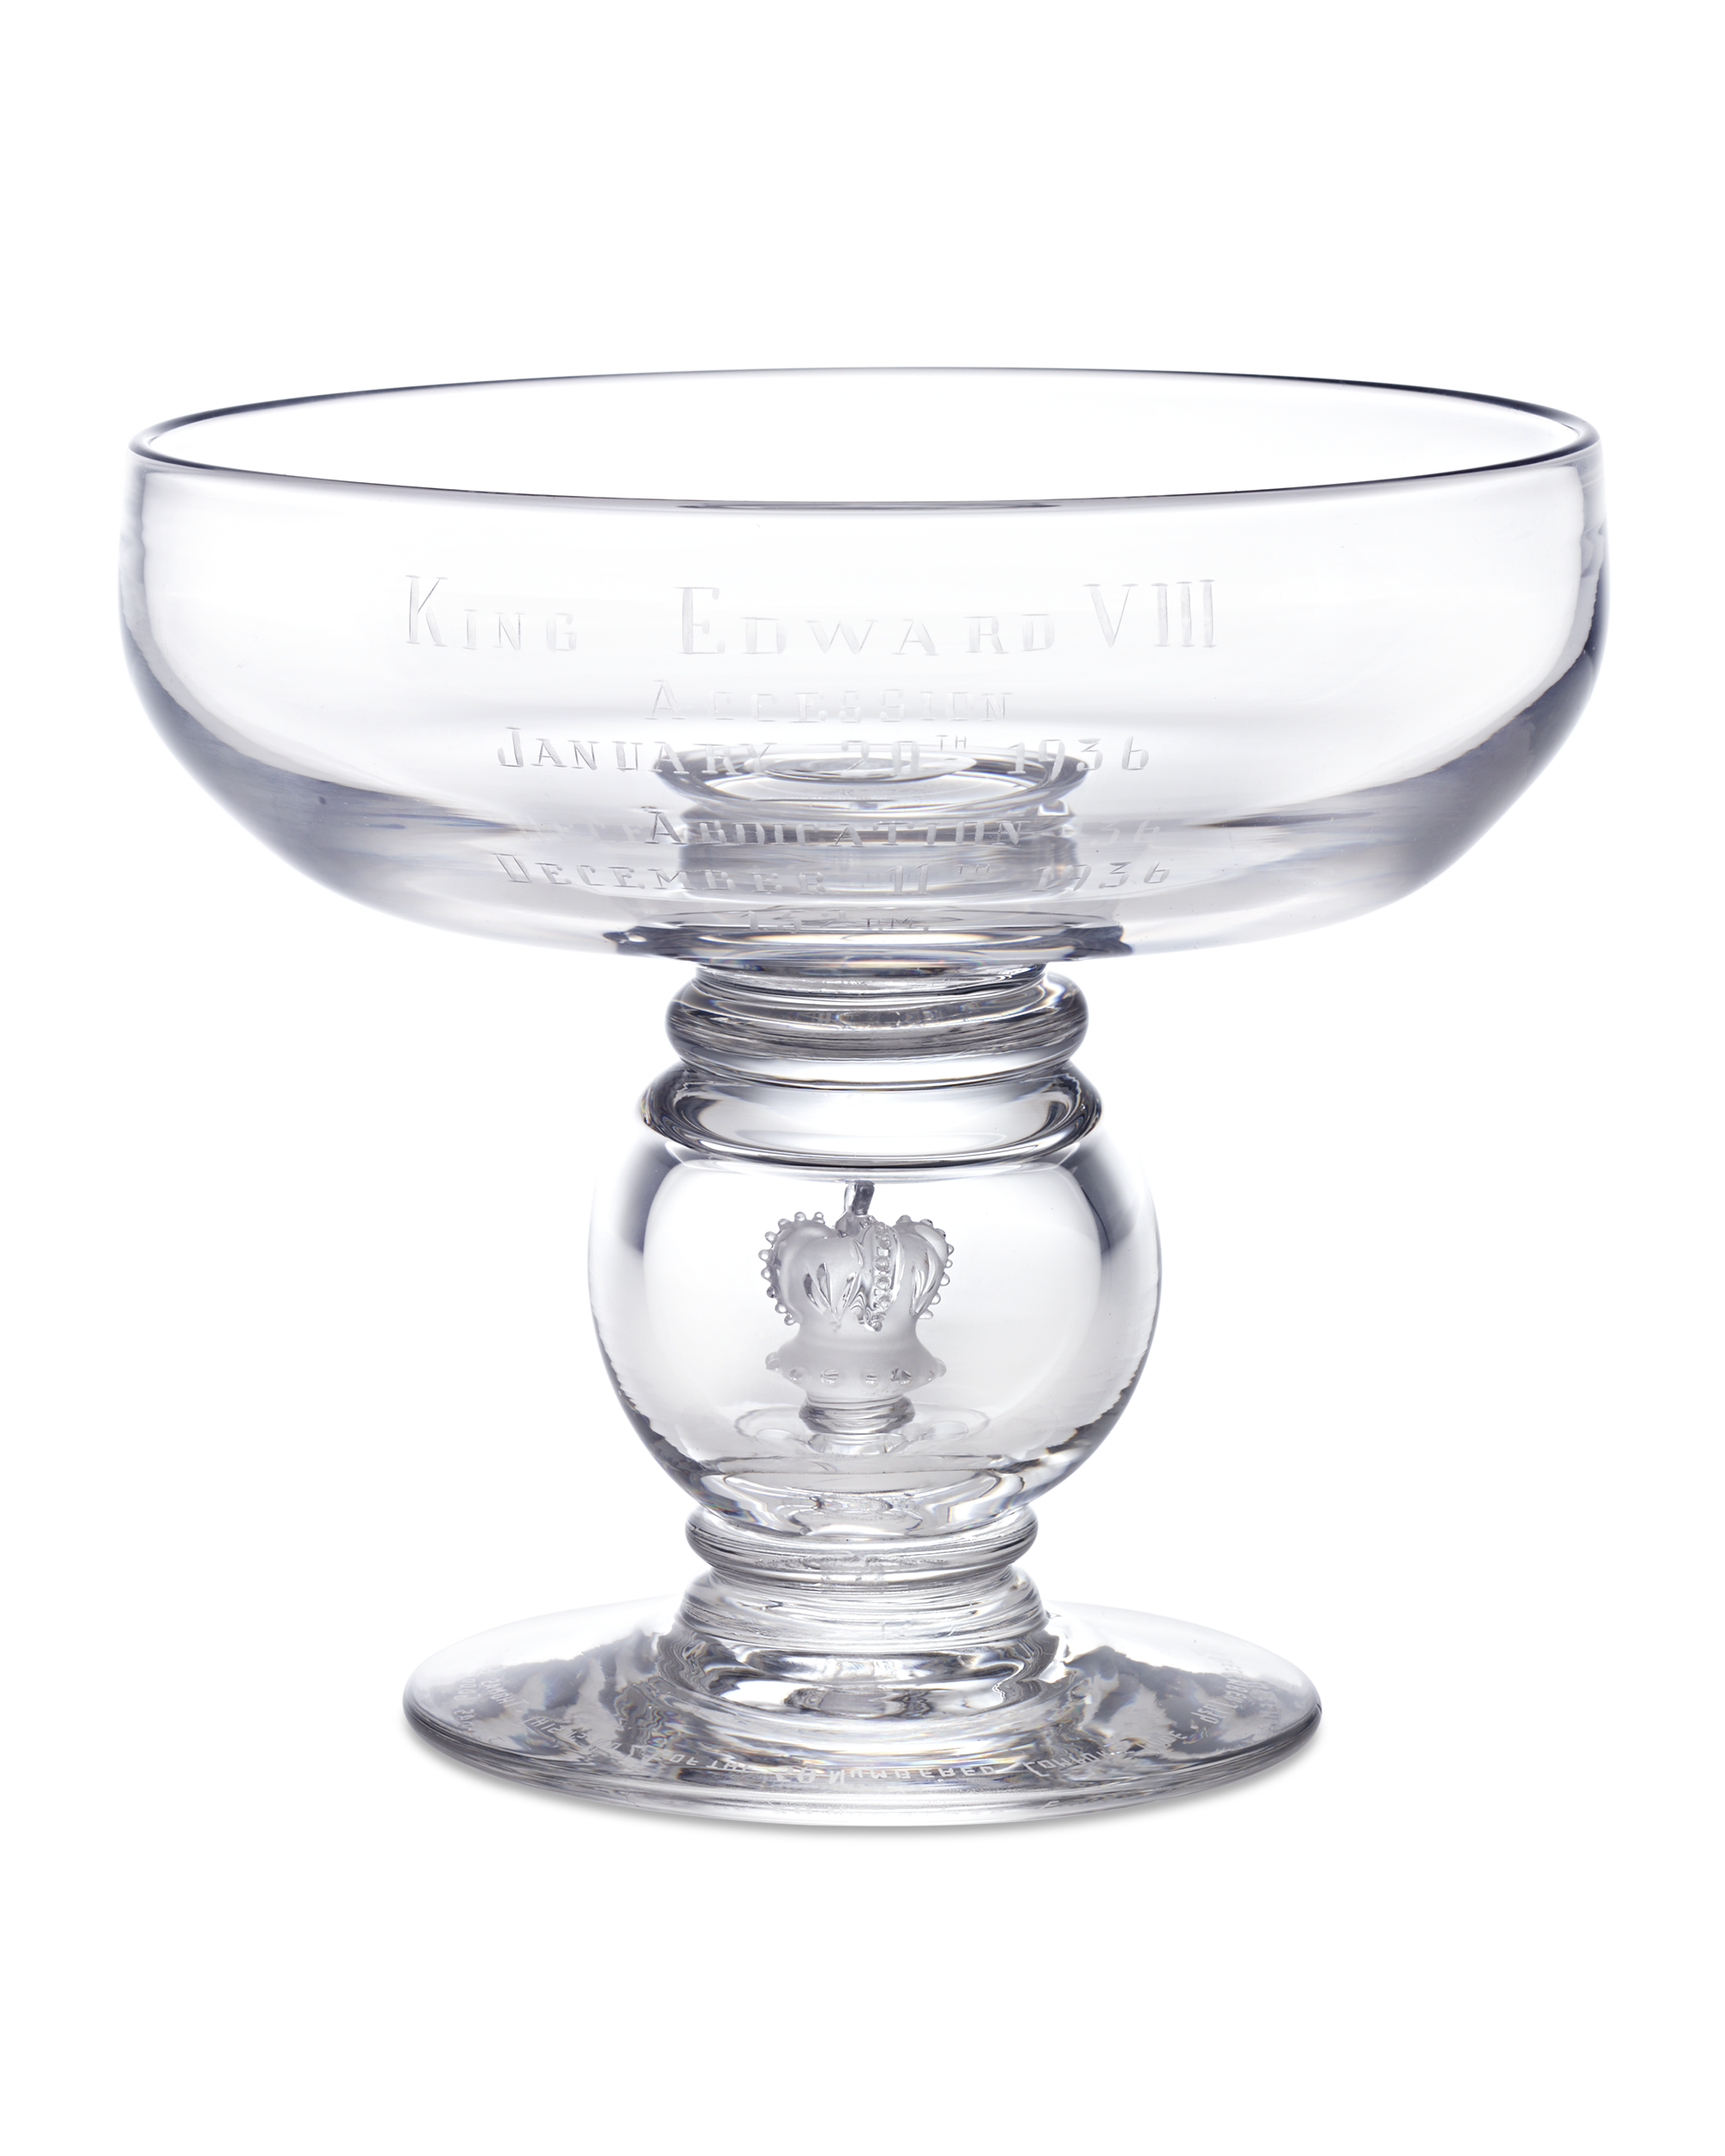 King Edward VIII Commemorative Abdication Cup